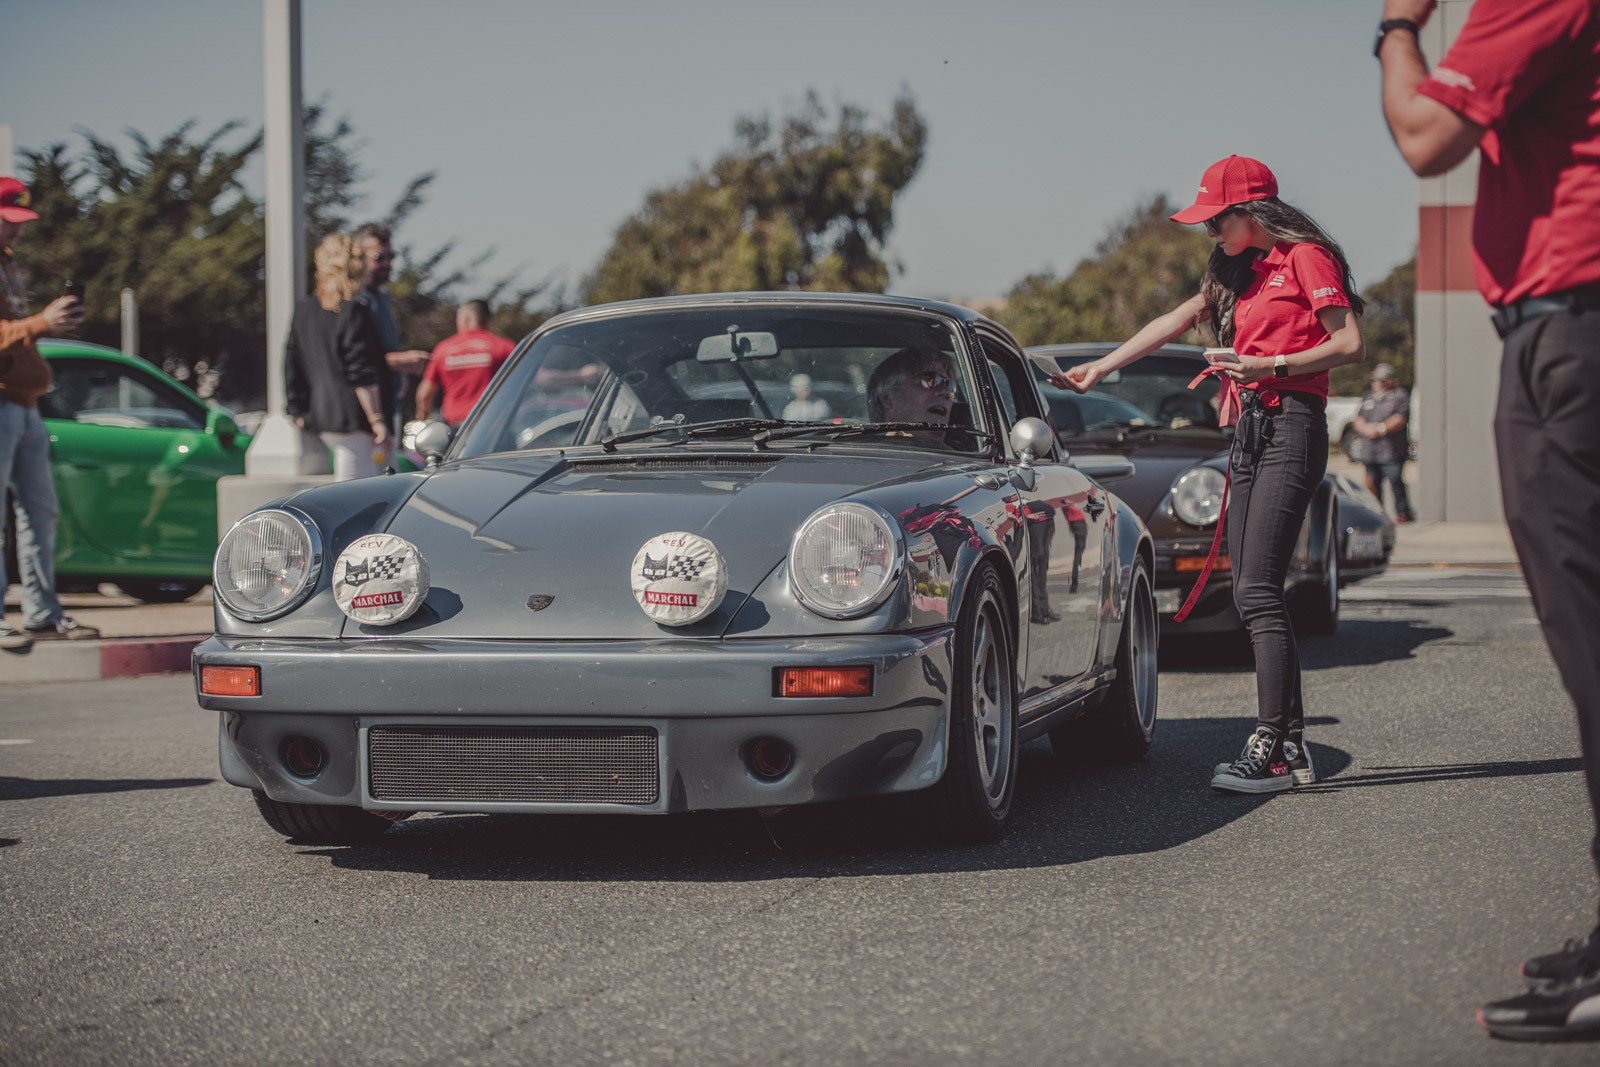 Porsche Classic show participants pulling in to park